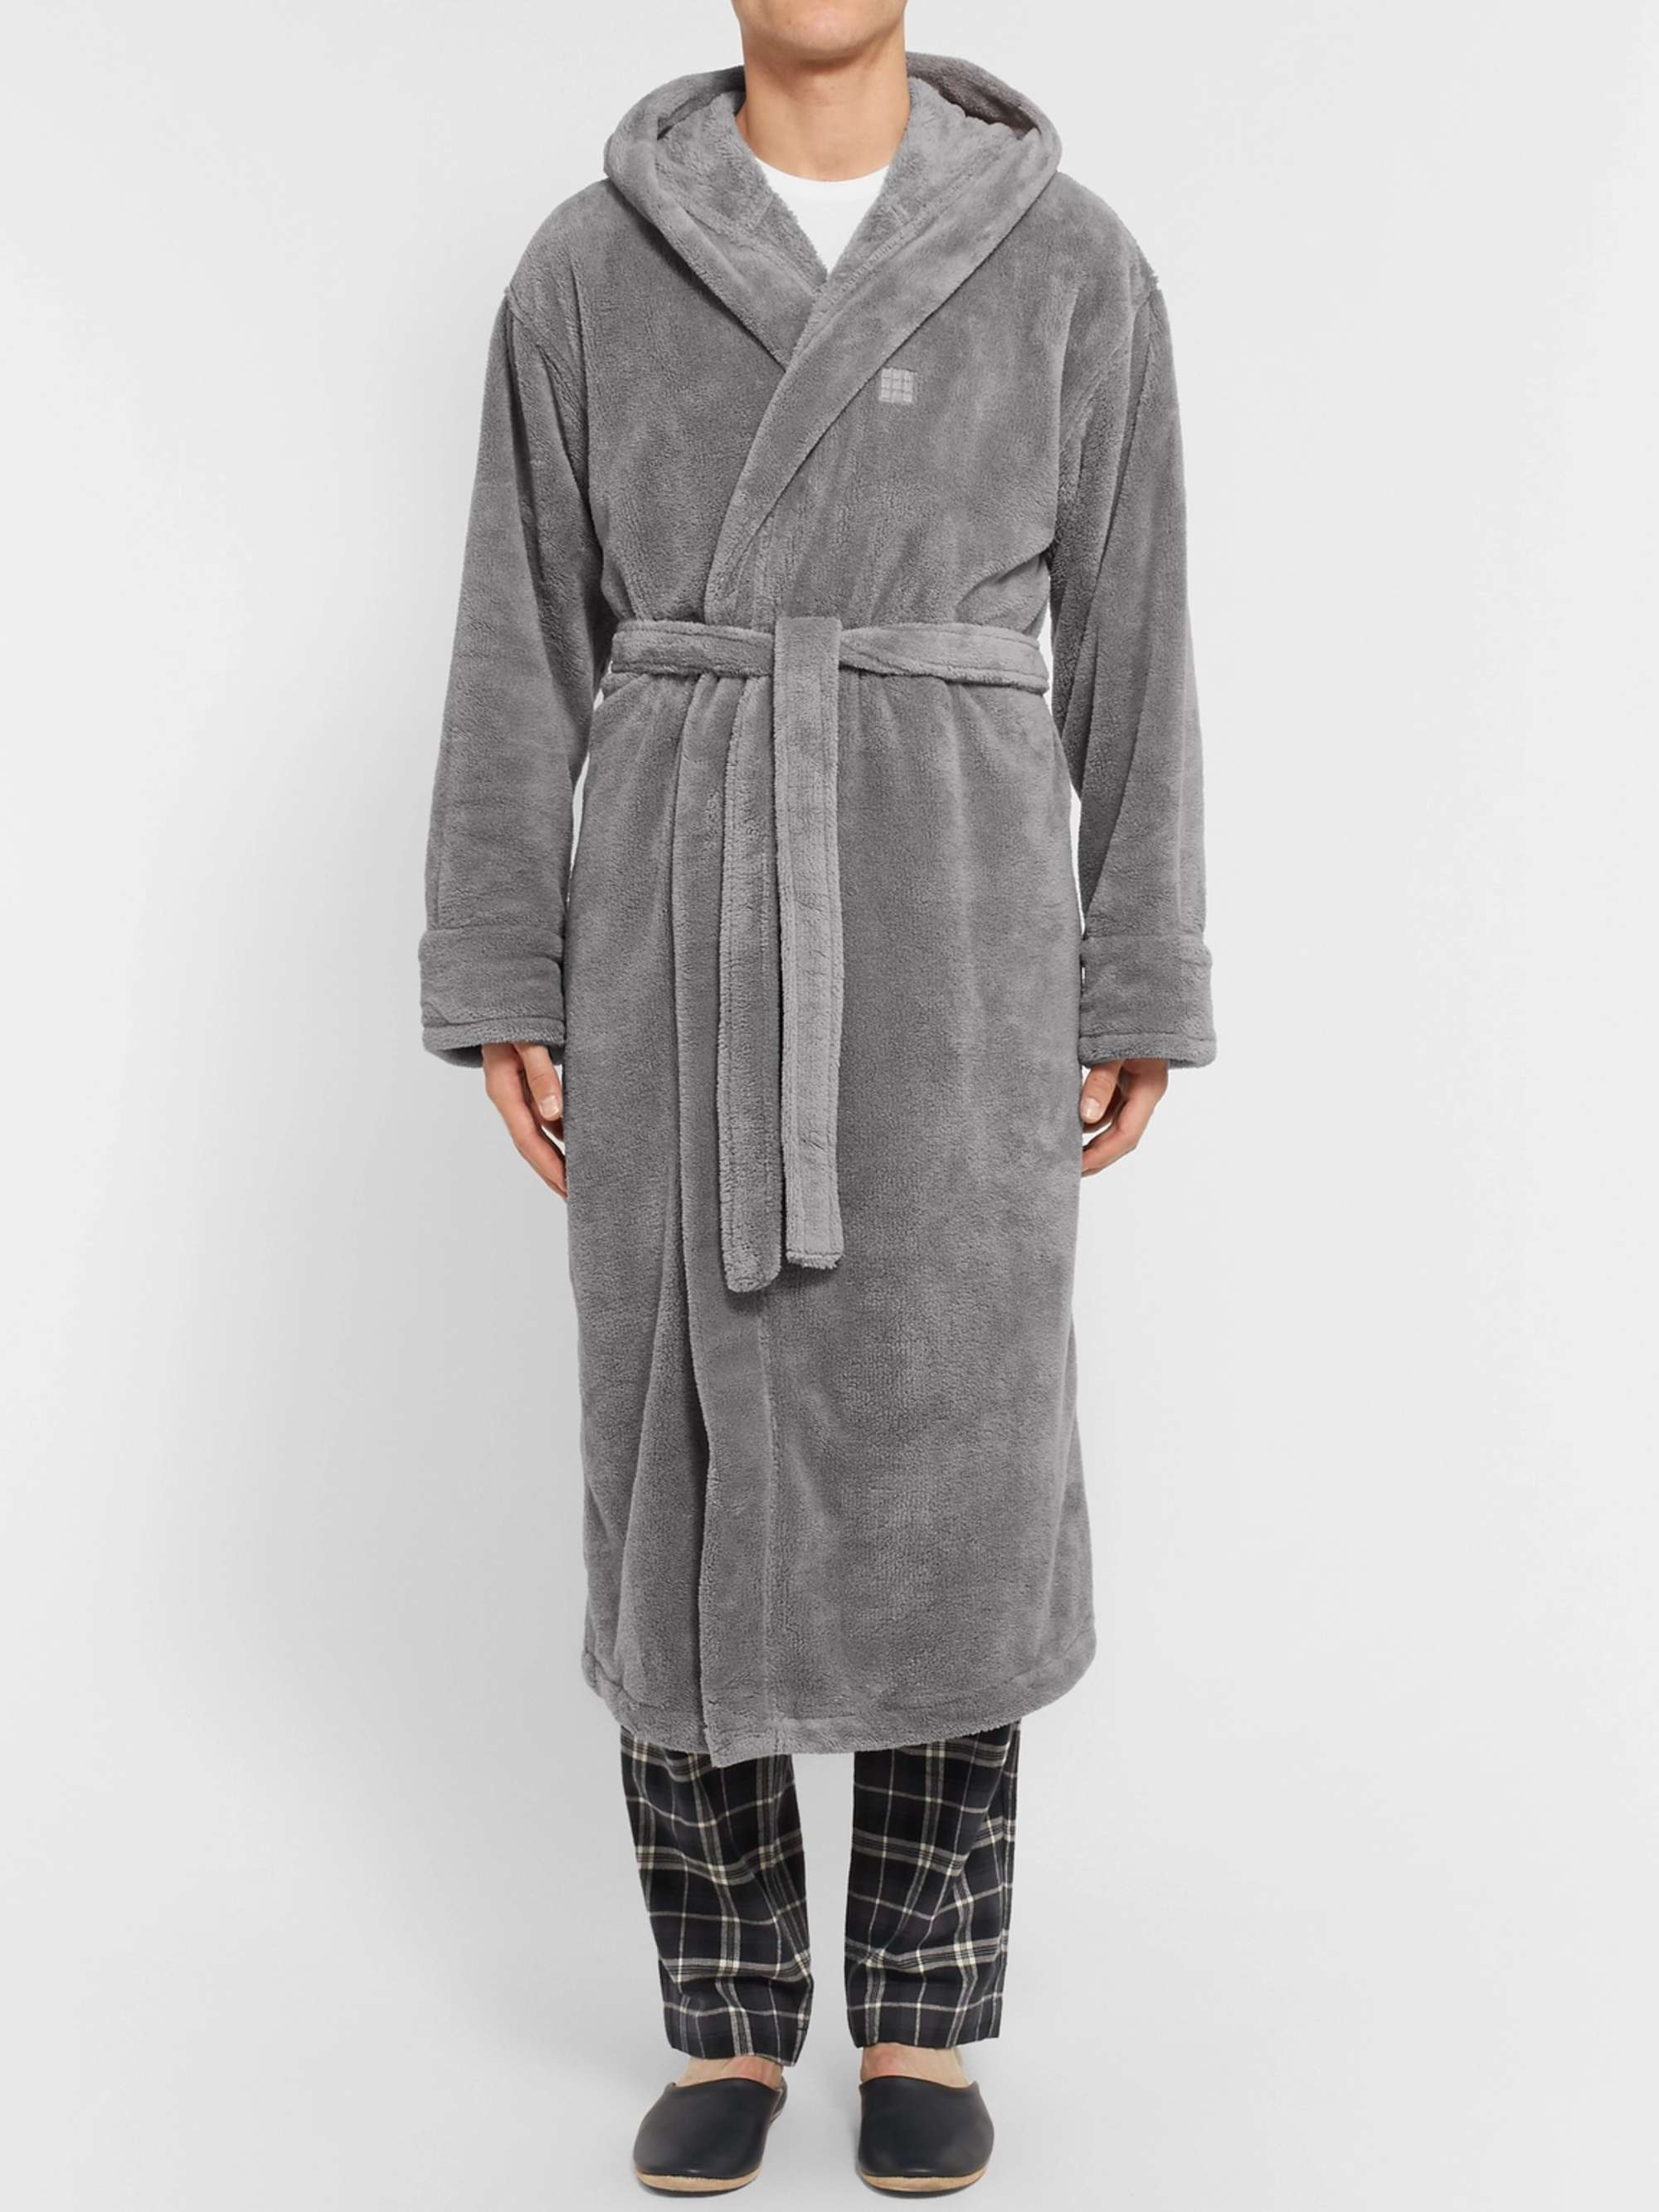 SOHO HOME Fleece Hooded Robe